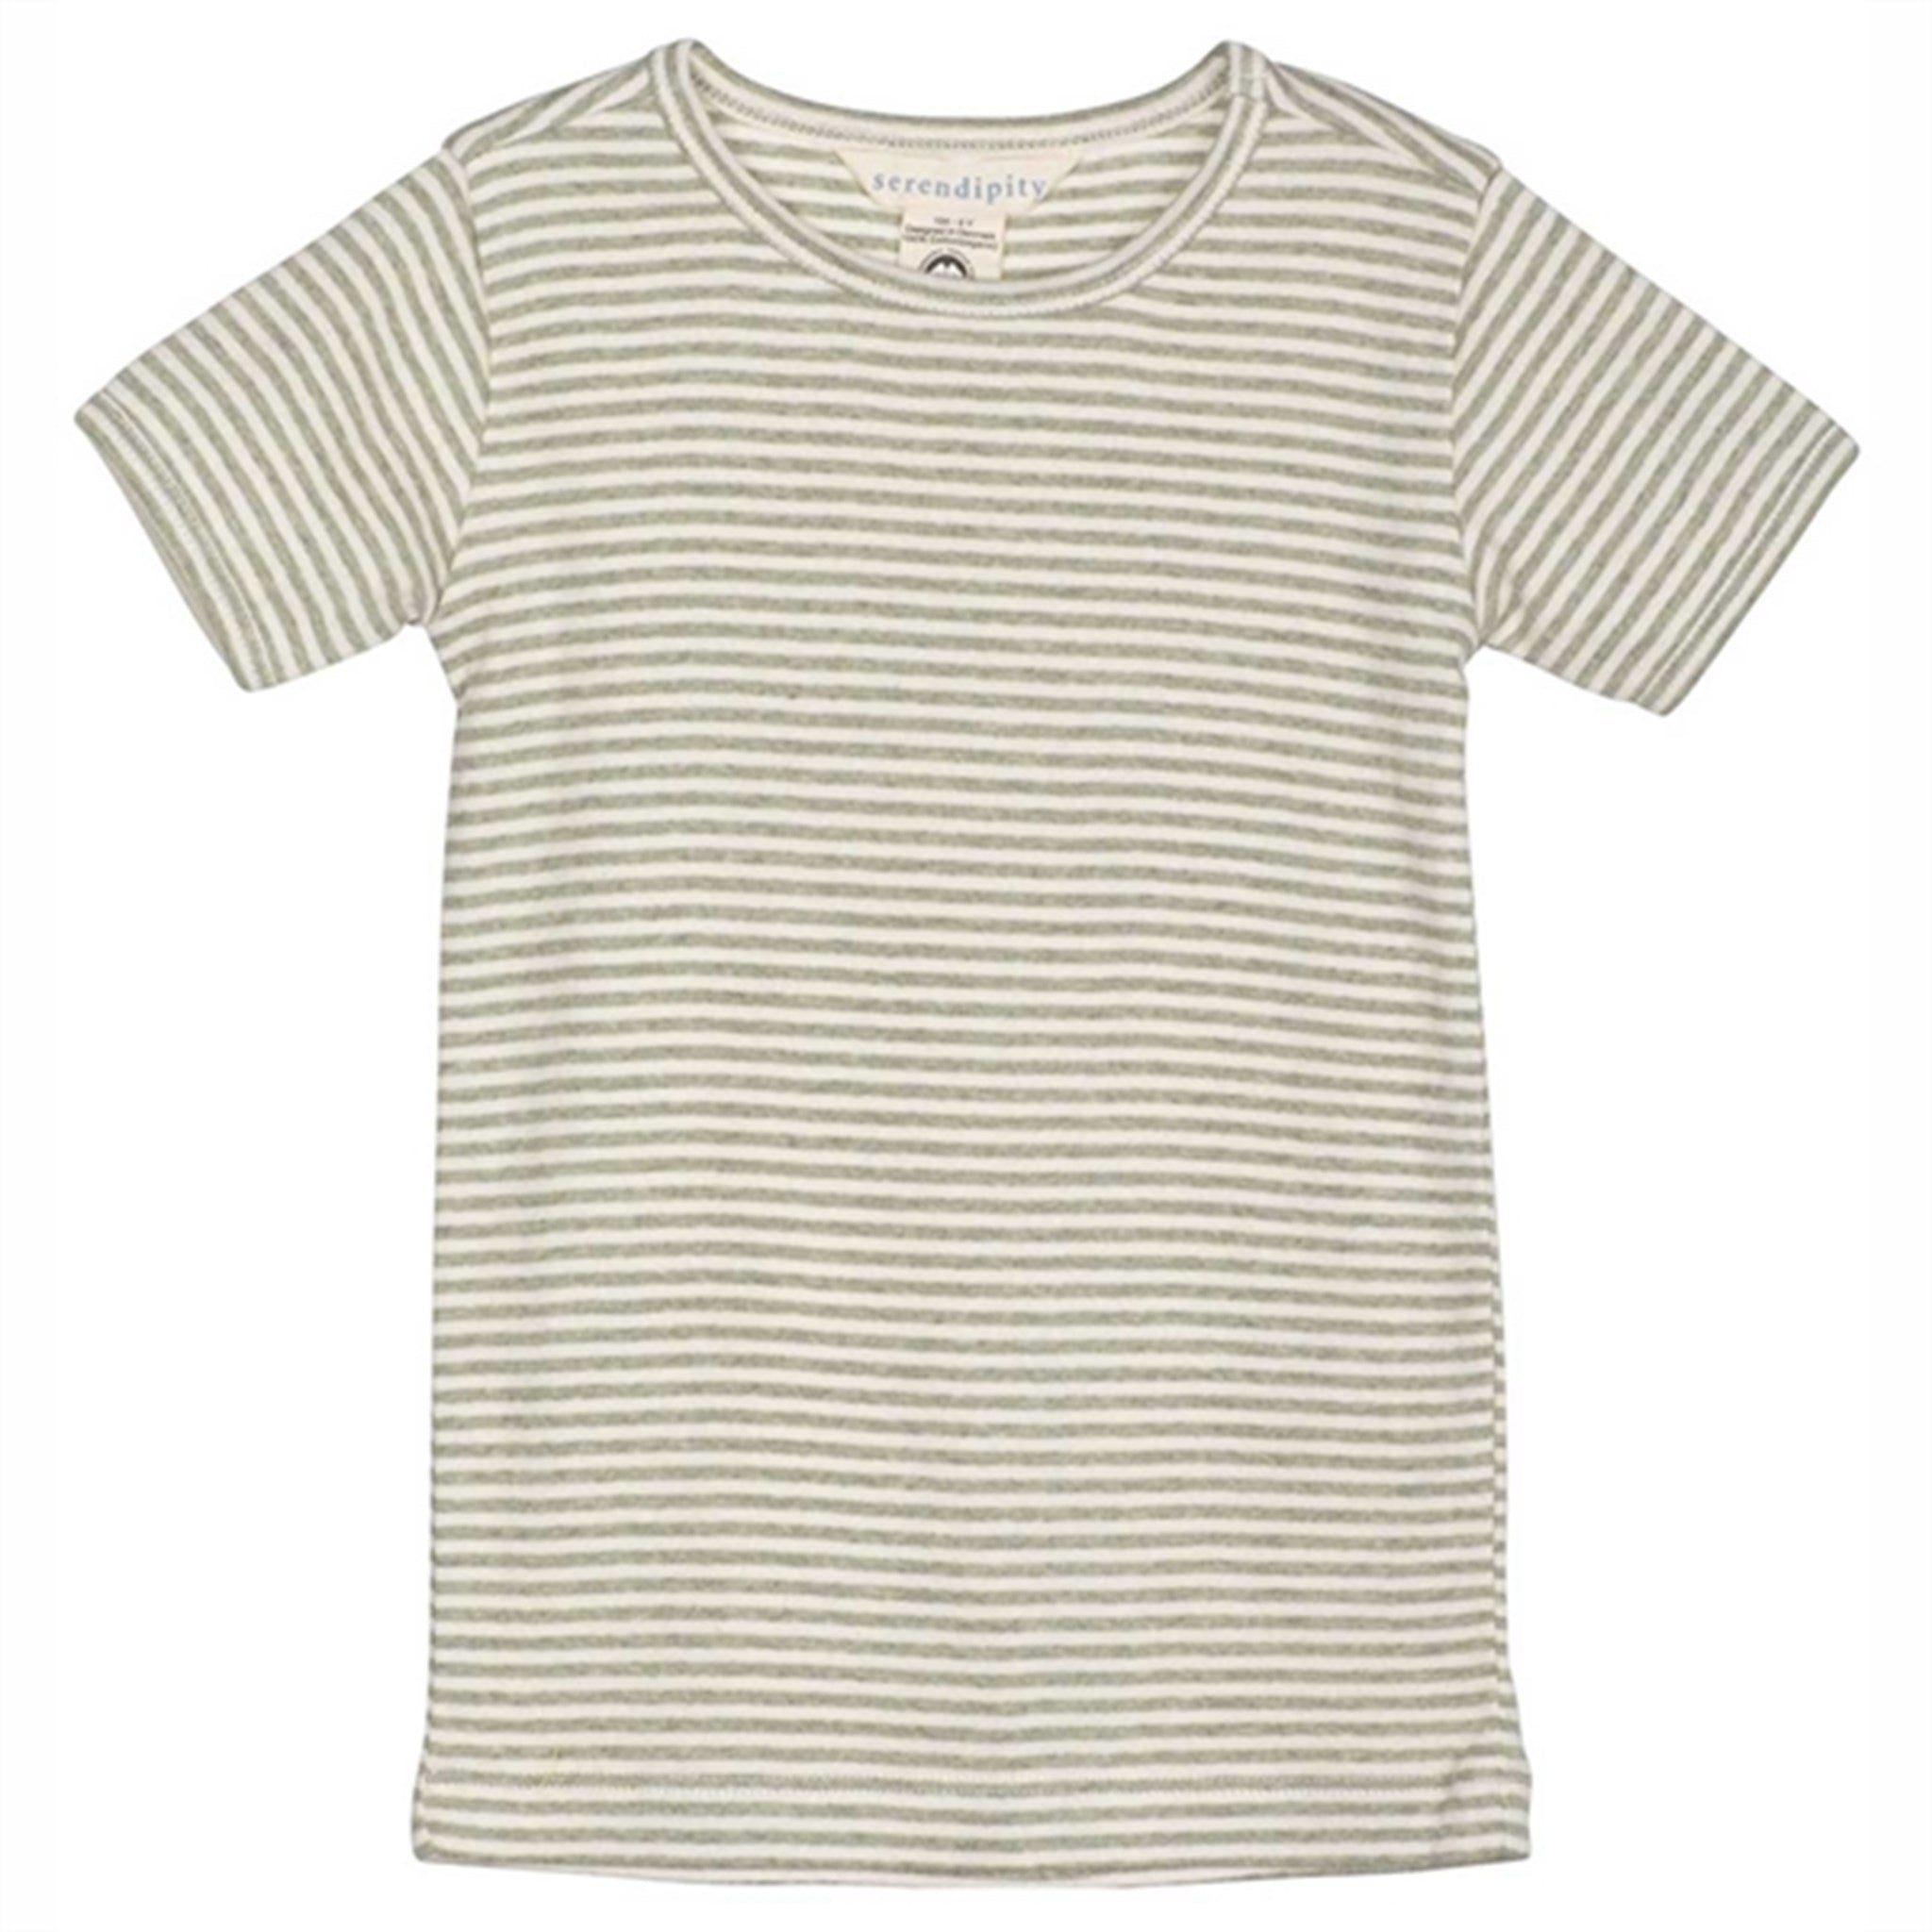 Serendipity Sage/Offwhite Stripe T-shirt